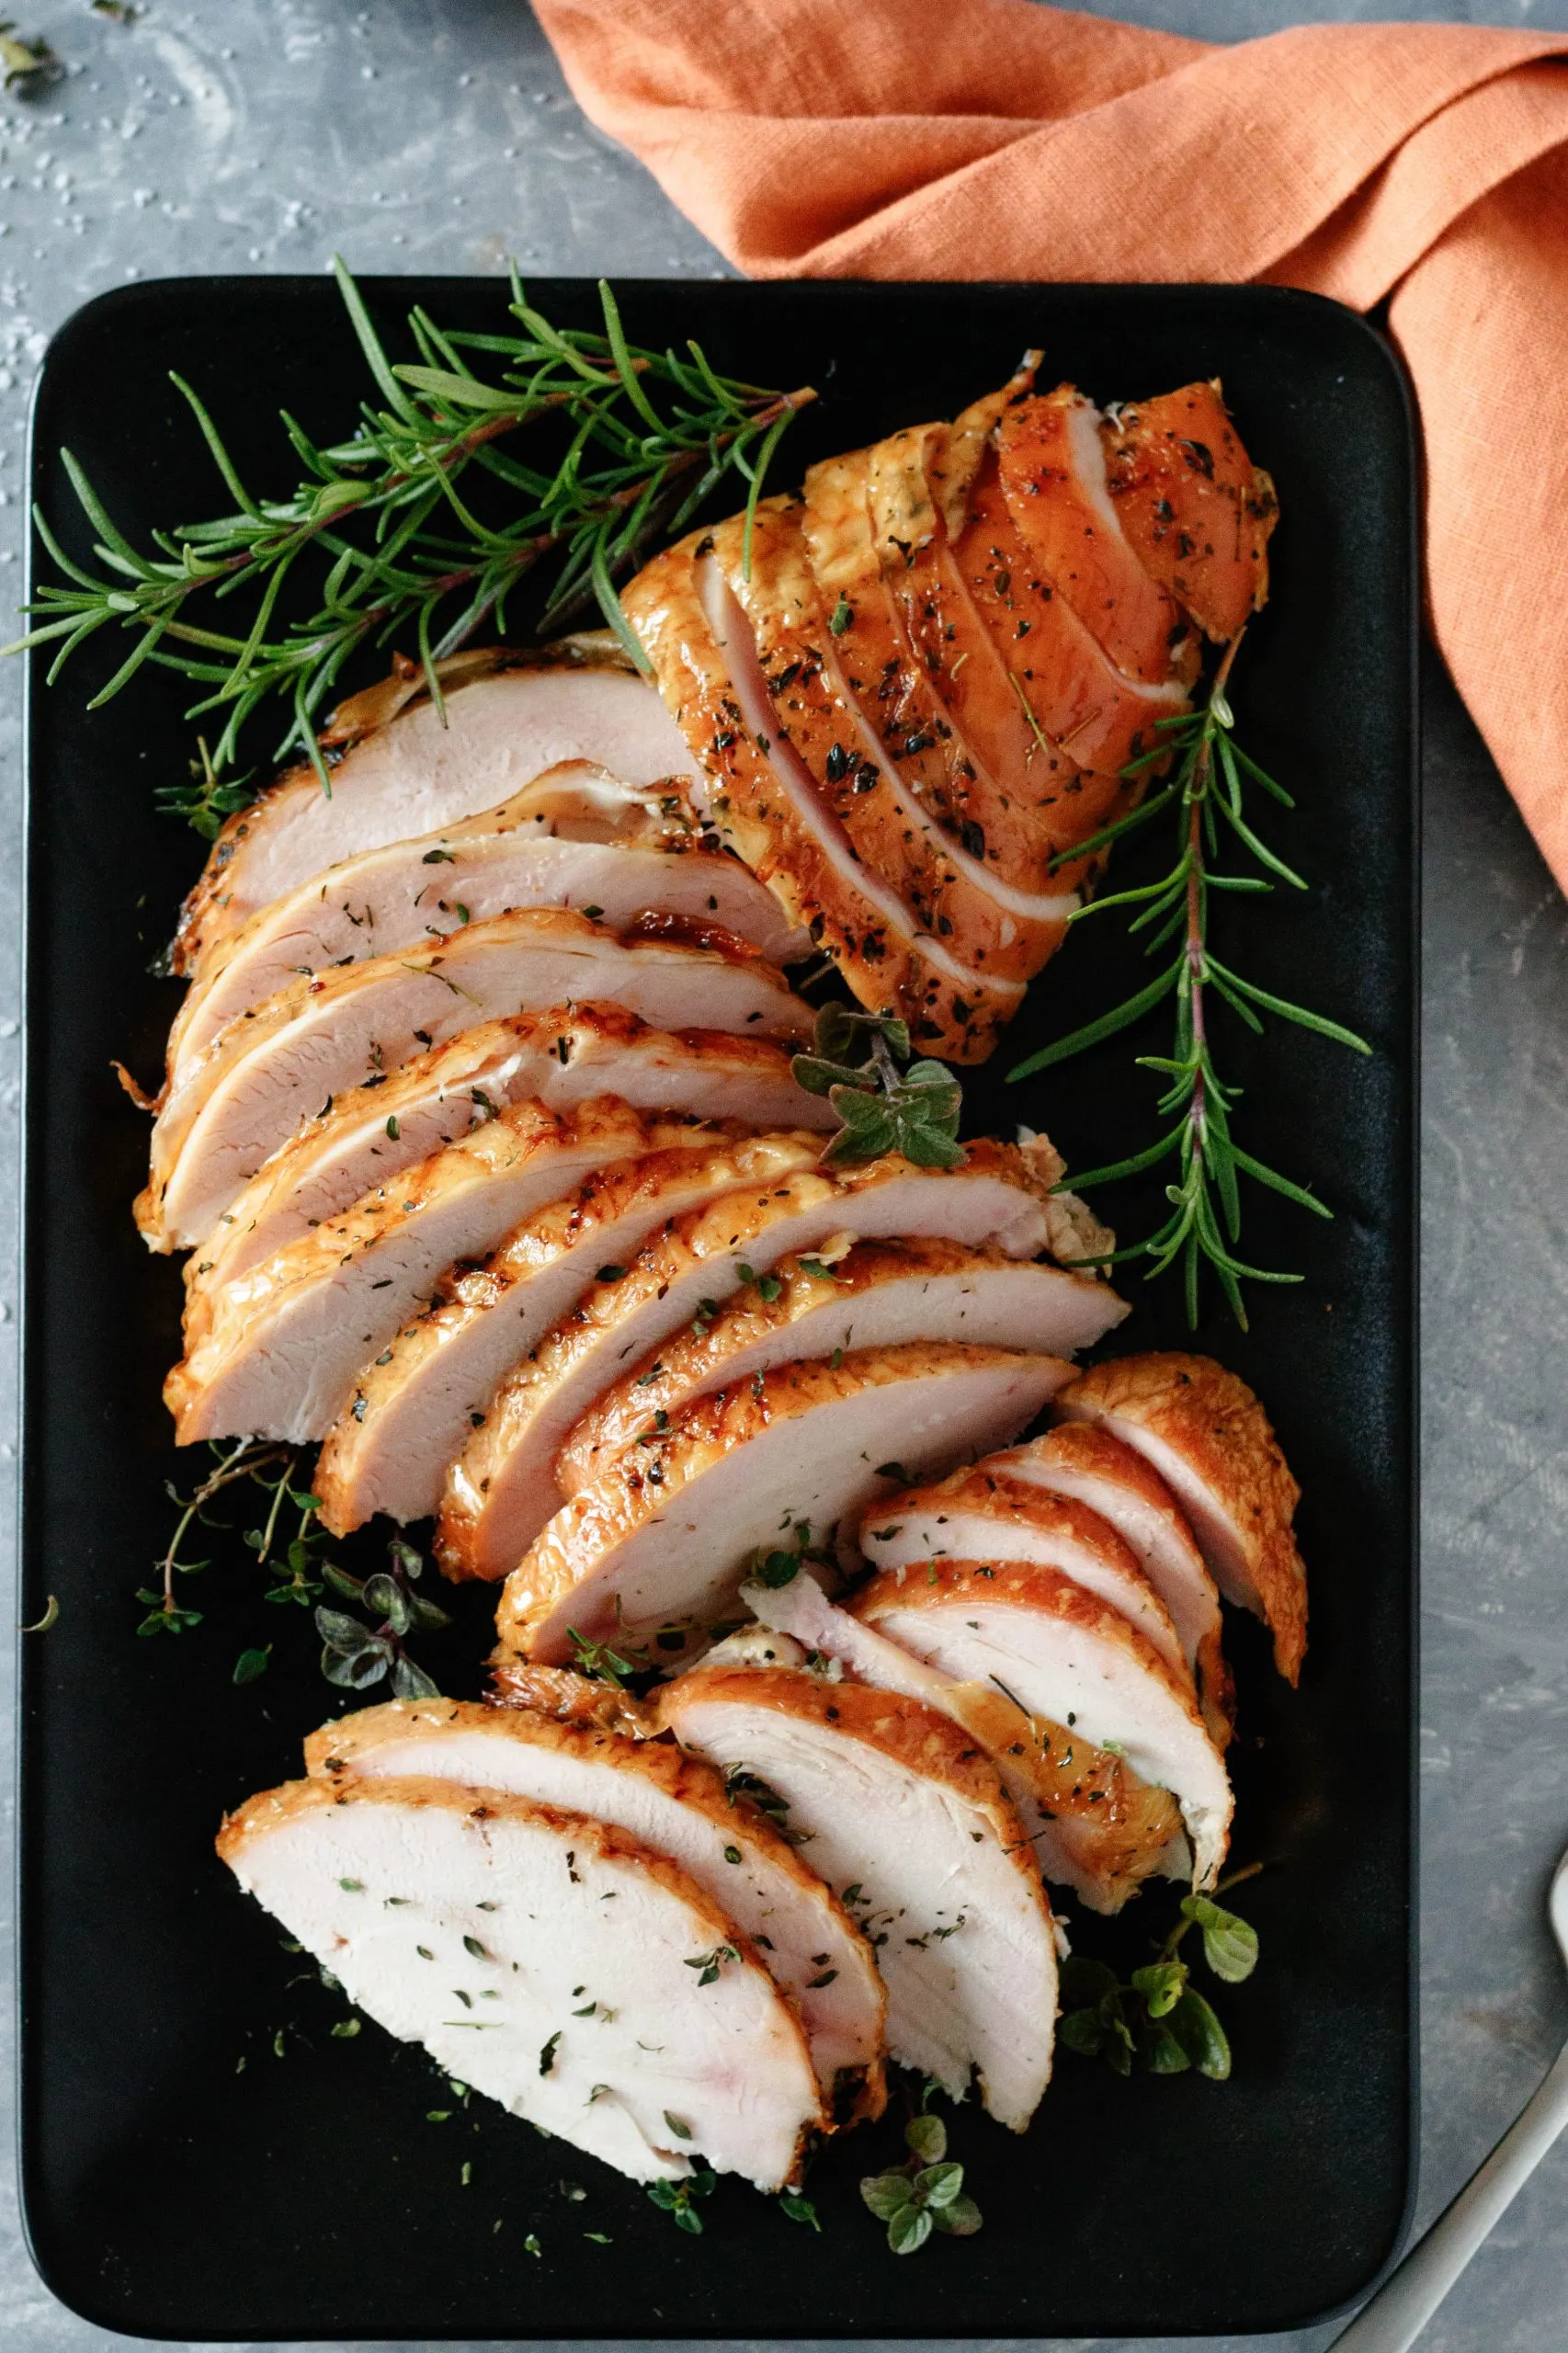 https://goodiegodmother.com/wp-content/uploads/2020/11/pellet-grill-turkey-breast-recipe-scaled.jpg.webp